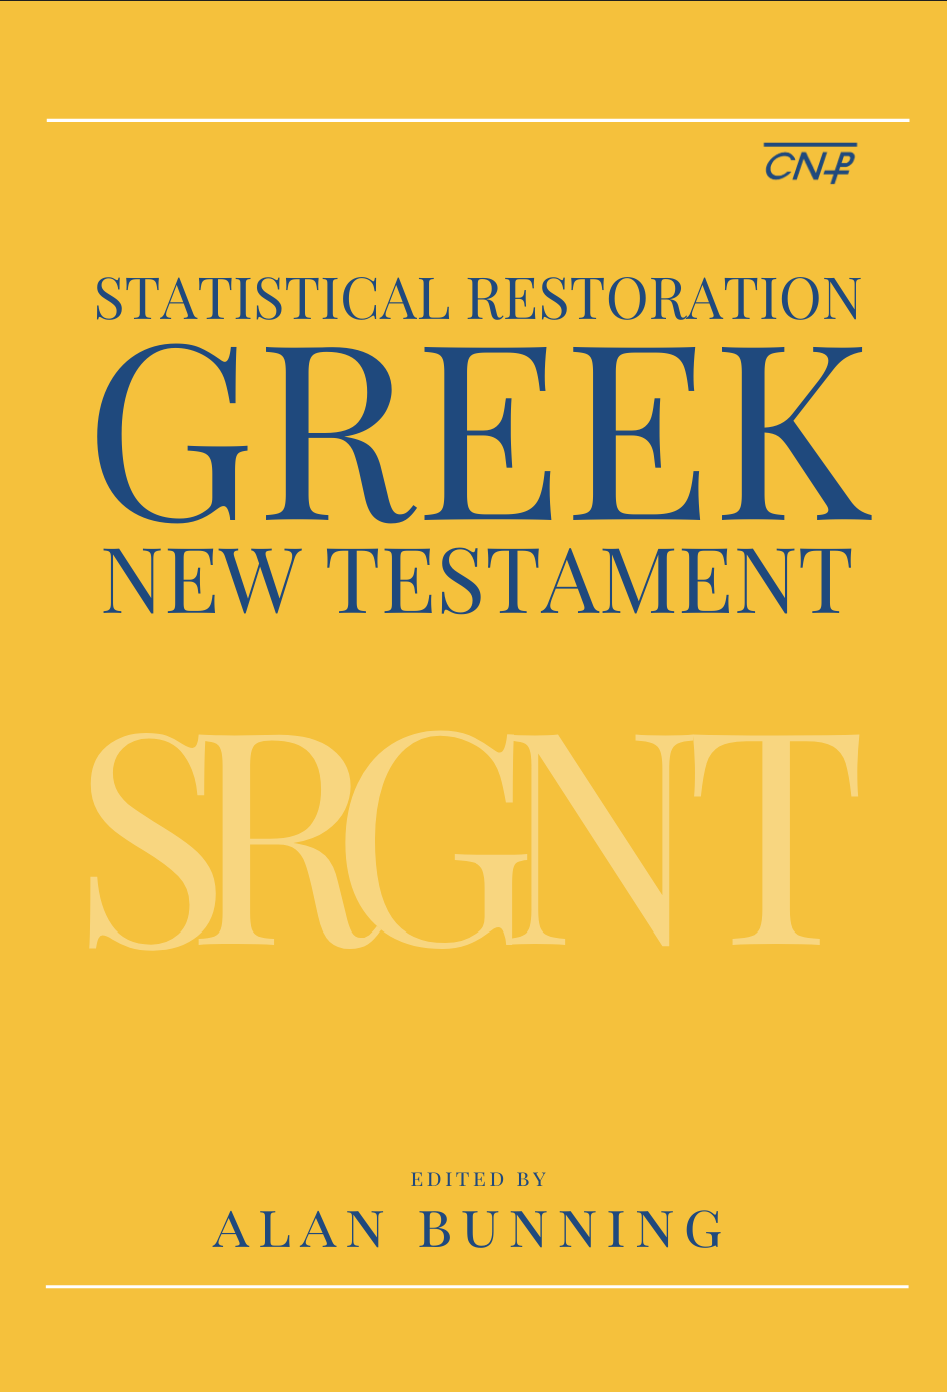 Statistical Restoration Greek New Testament (SRGNT)